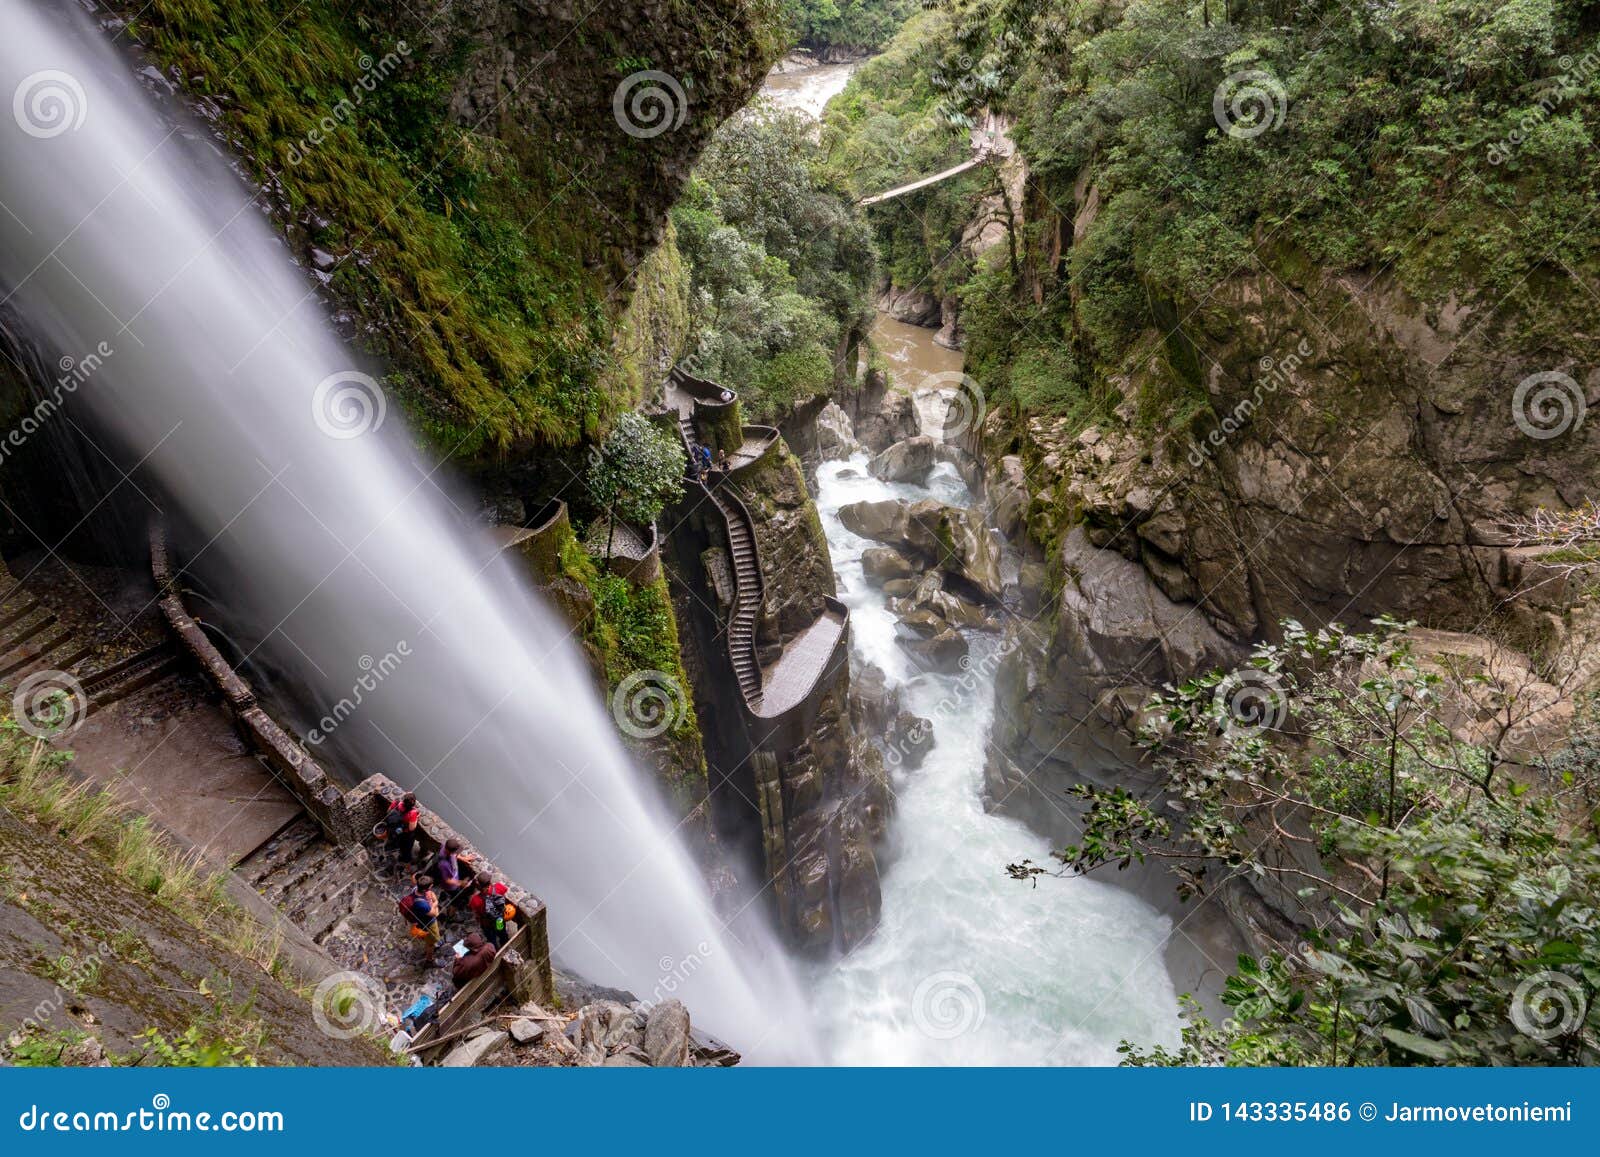 magnificent waterfall called pailon del diablo devil`s cauldron in banos, ecuador